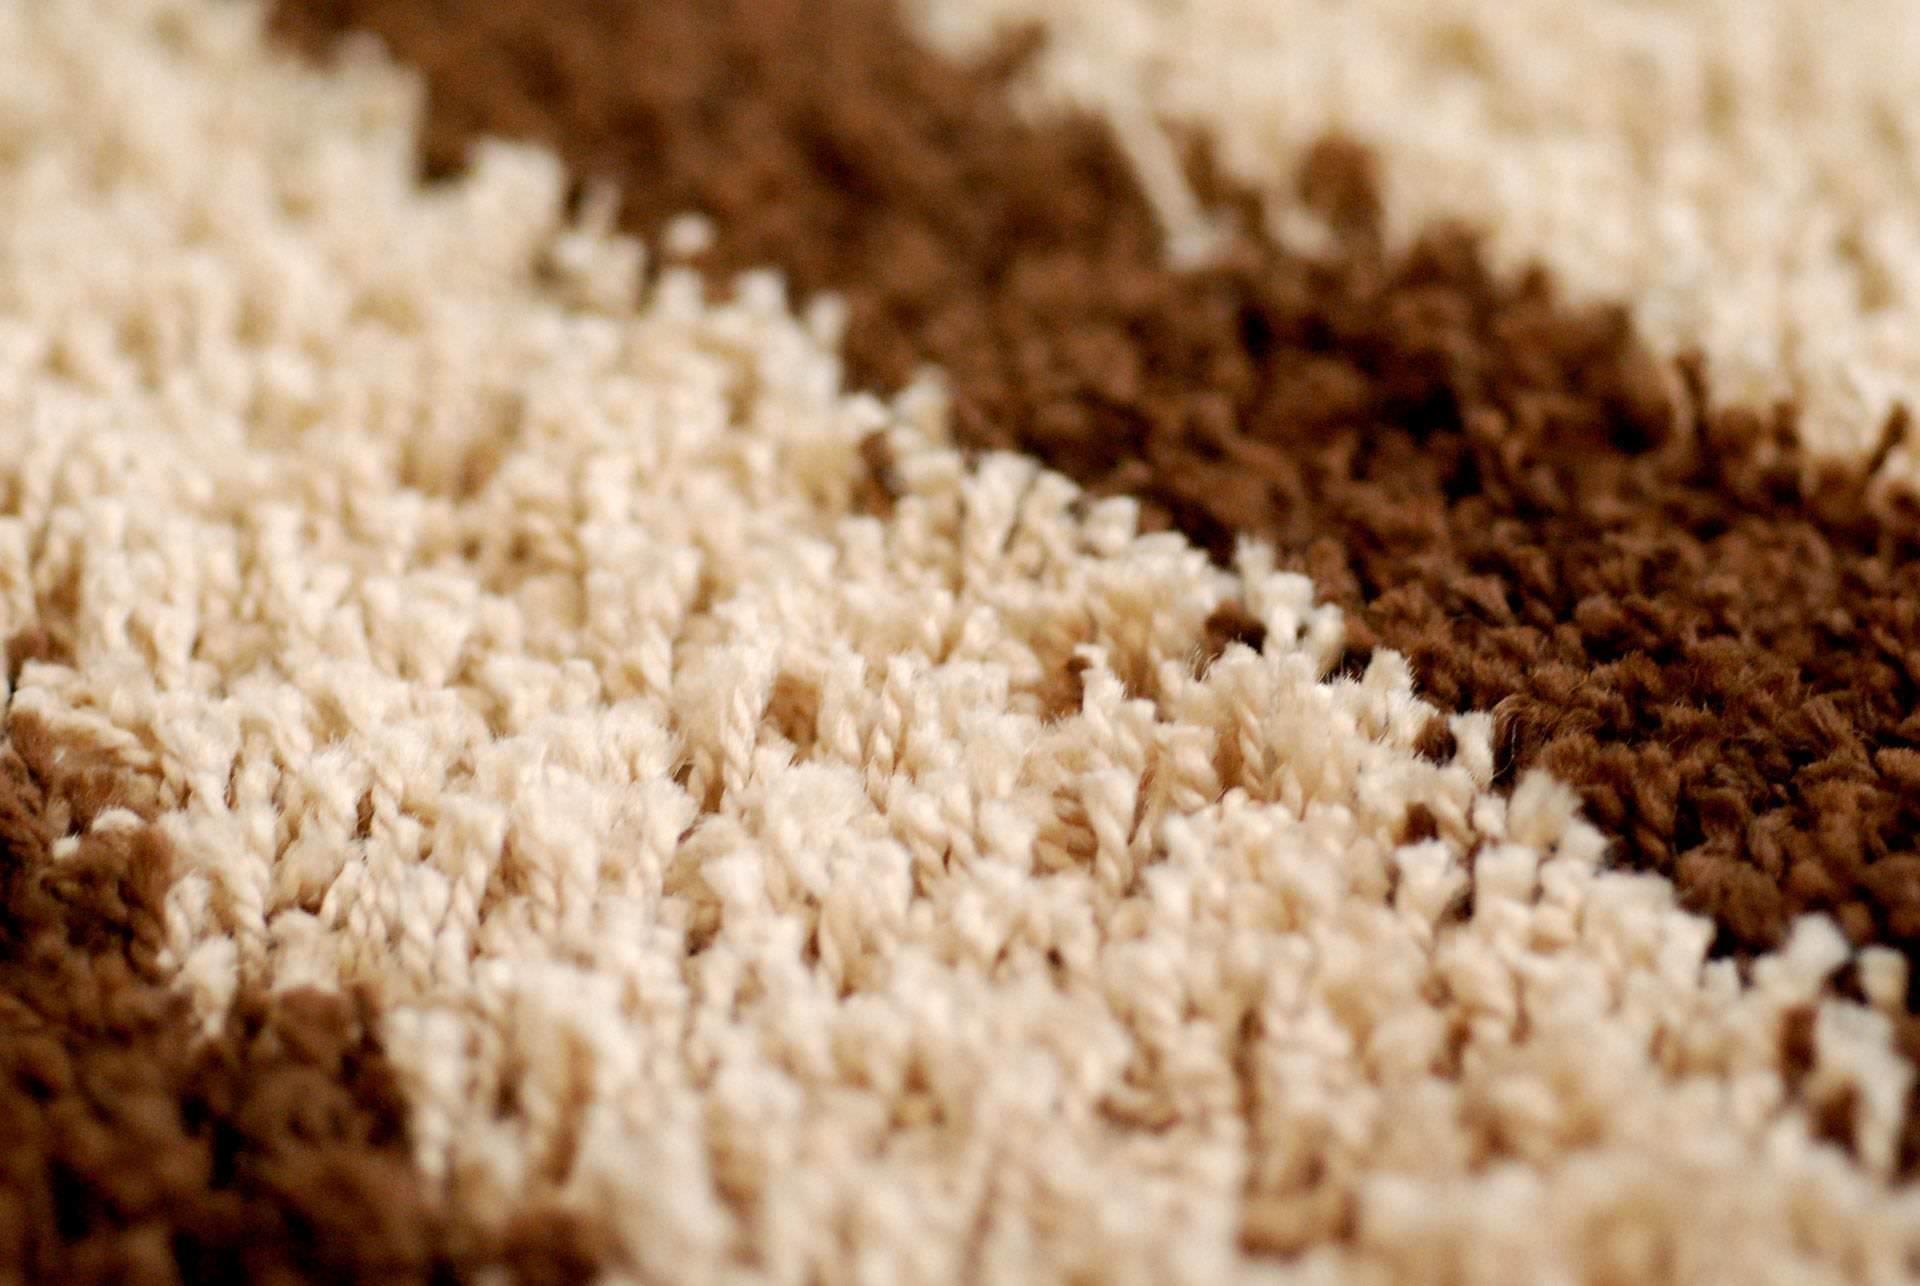 Close up of clean carpet fibres